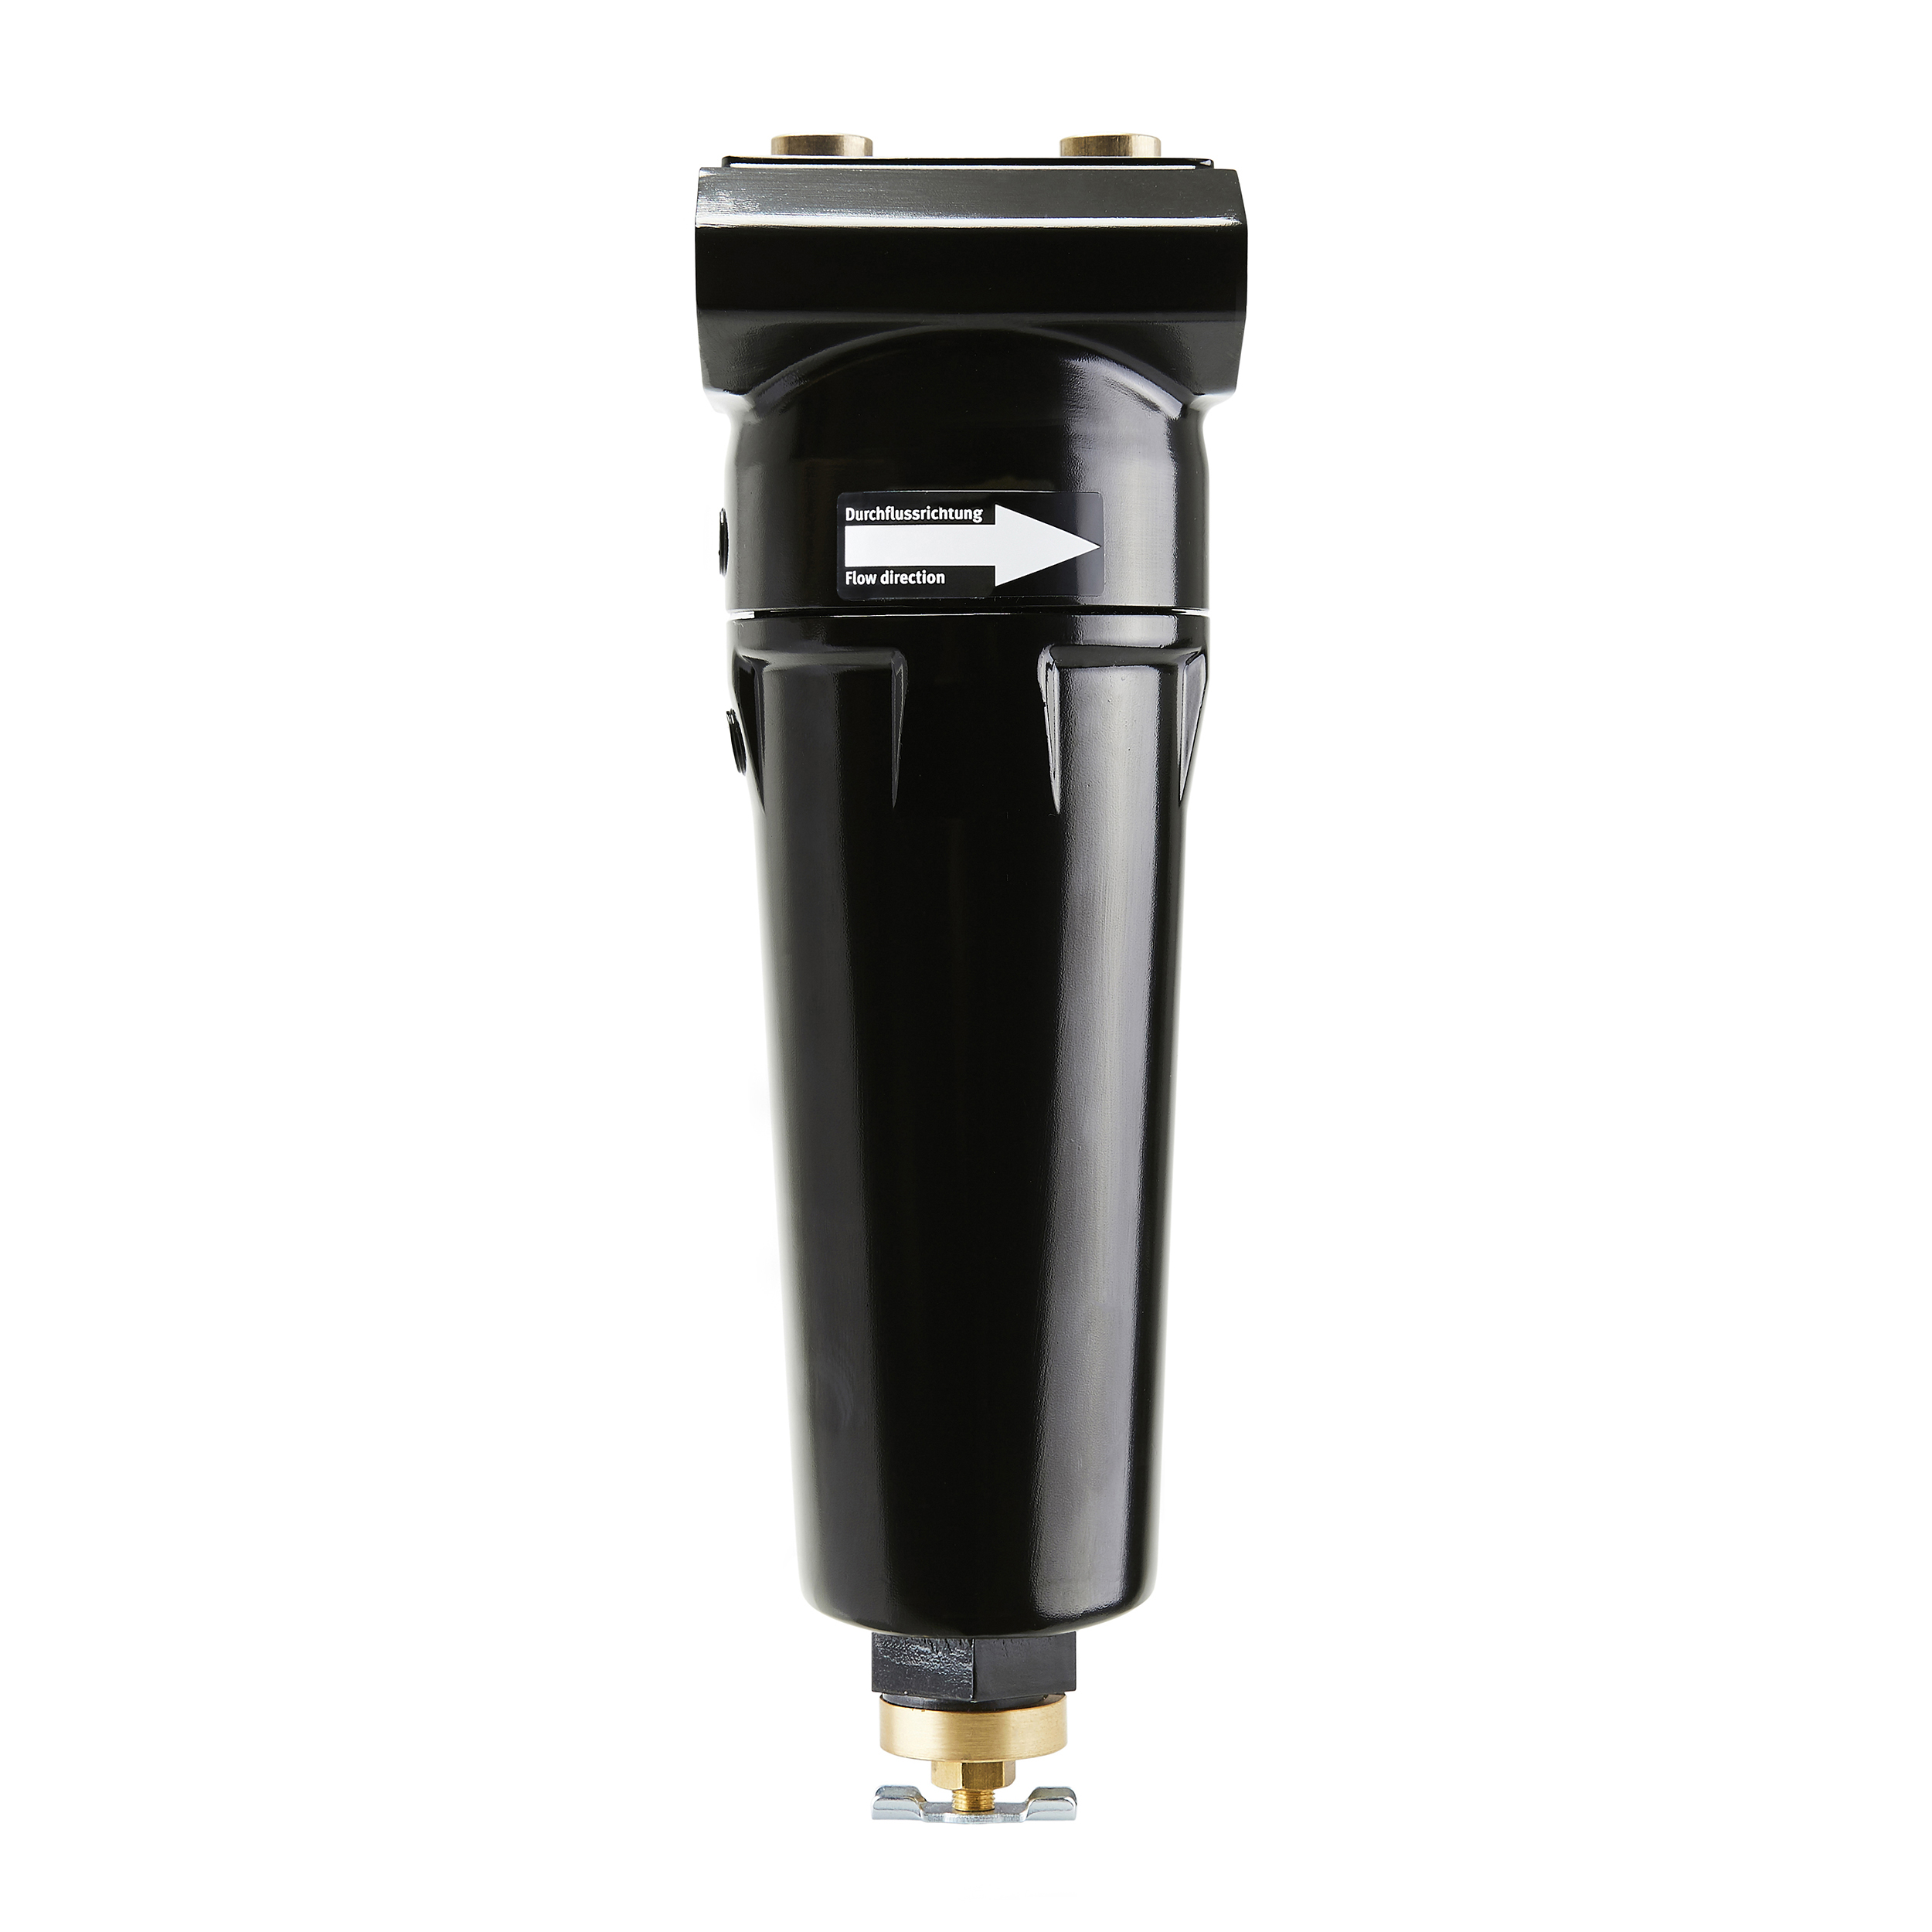 airclean, activated carbon filter, BG 50, G¼, manual drain valve, MOP: 16 bar